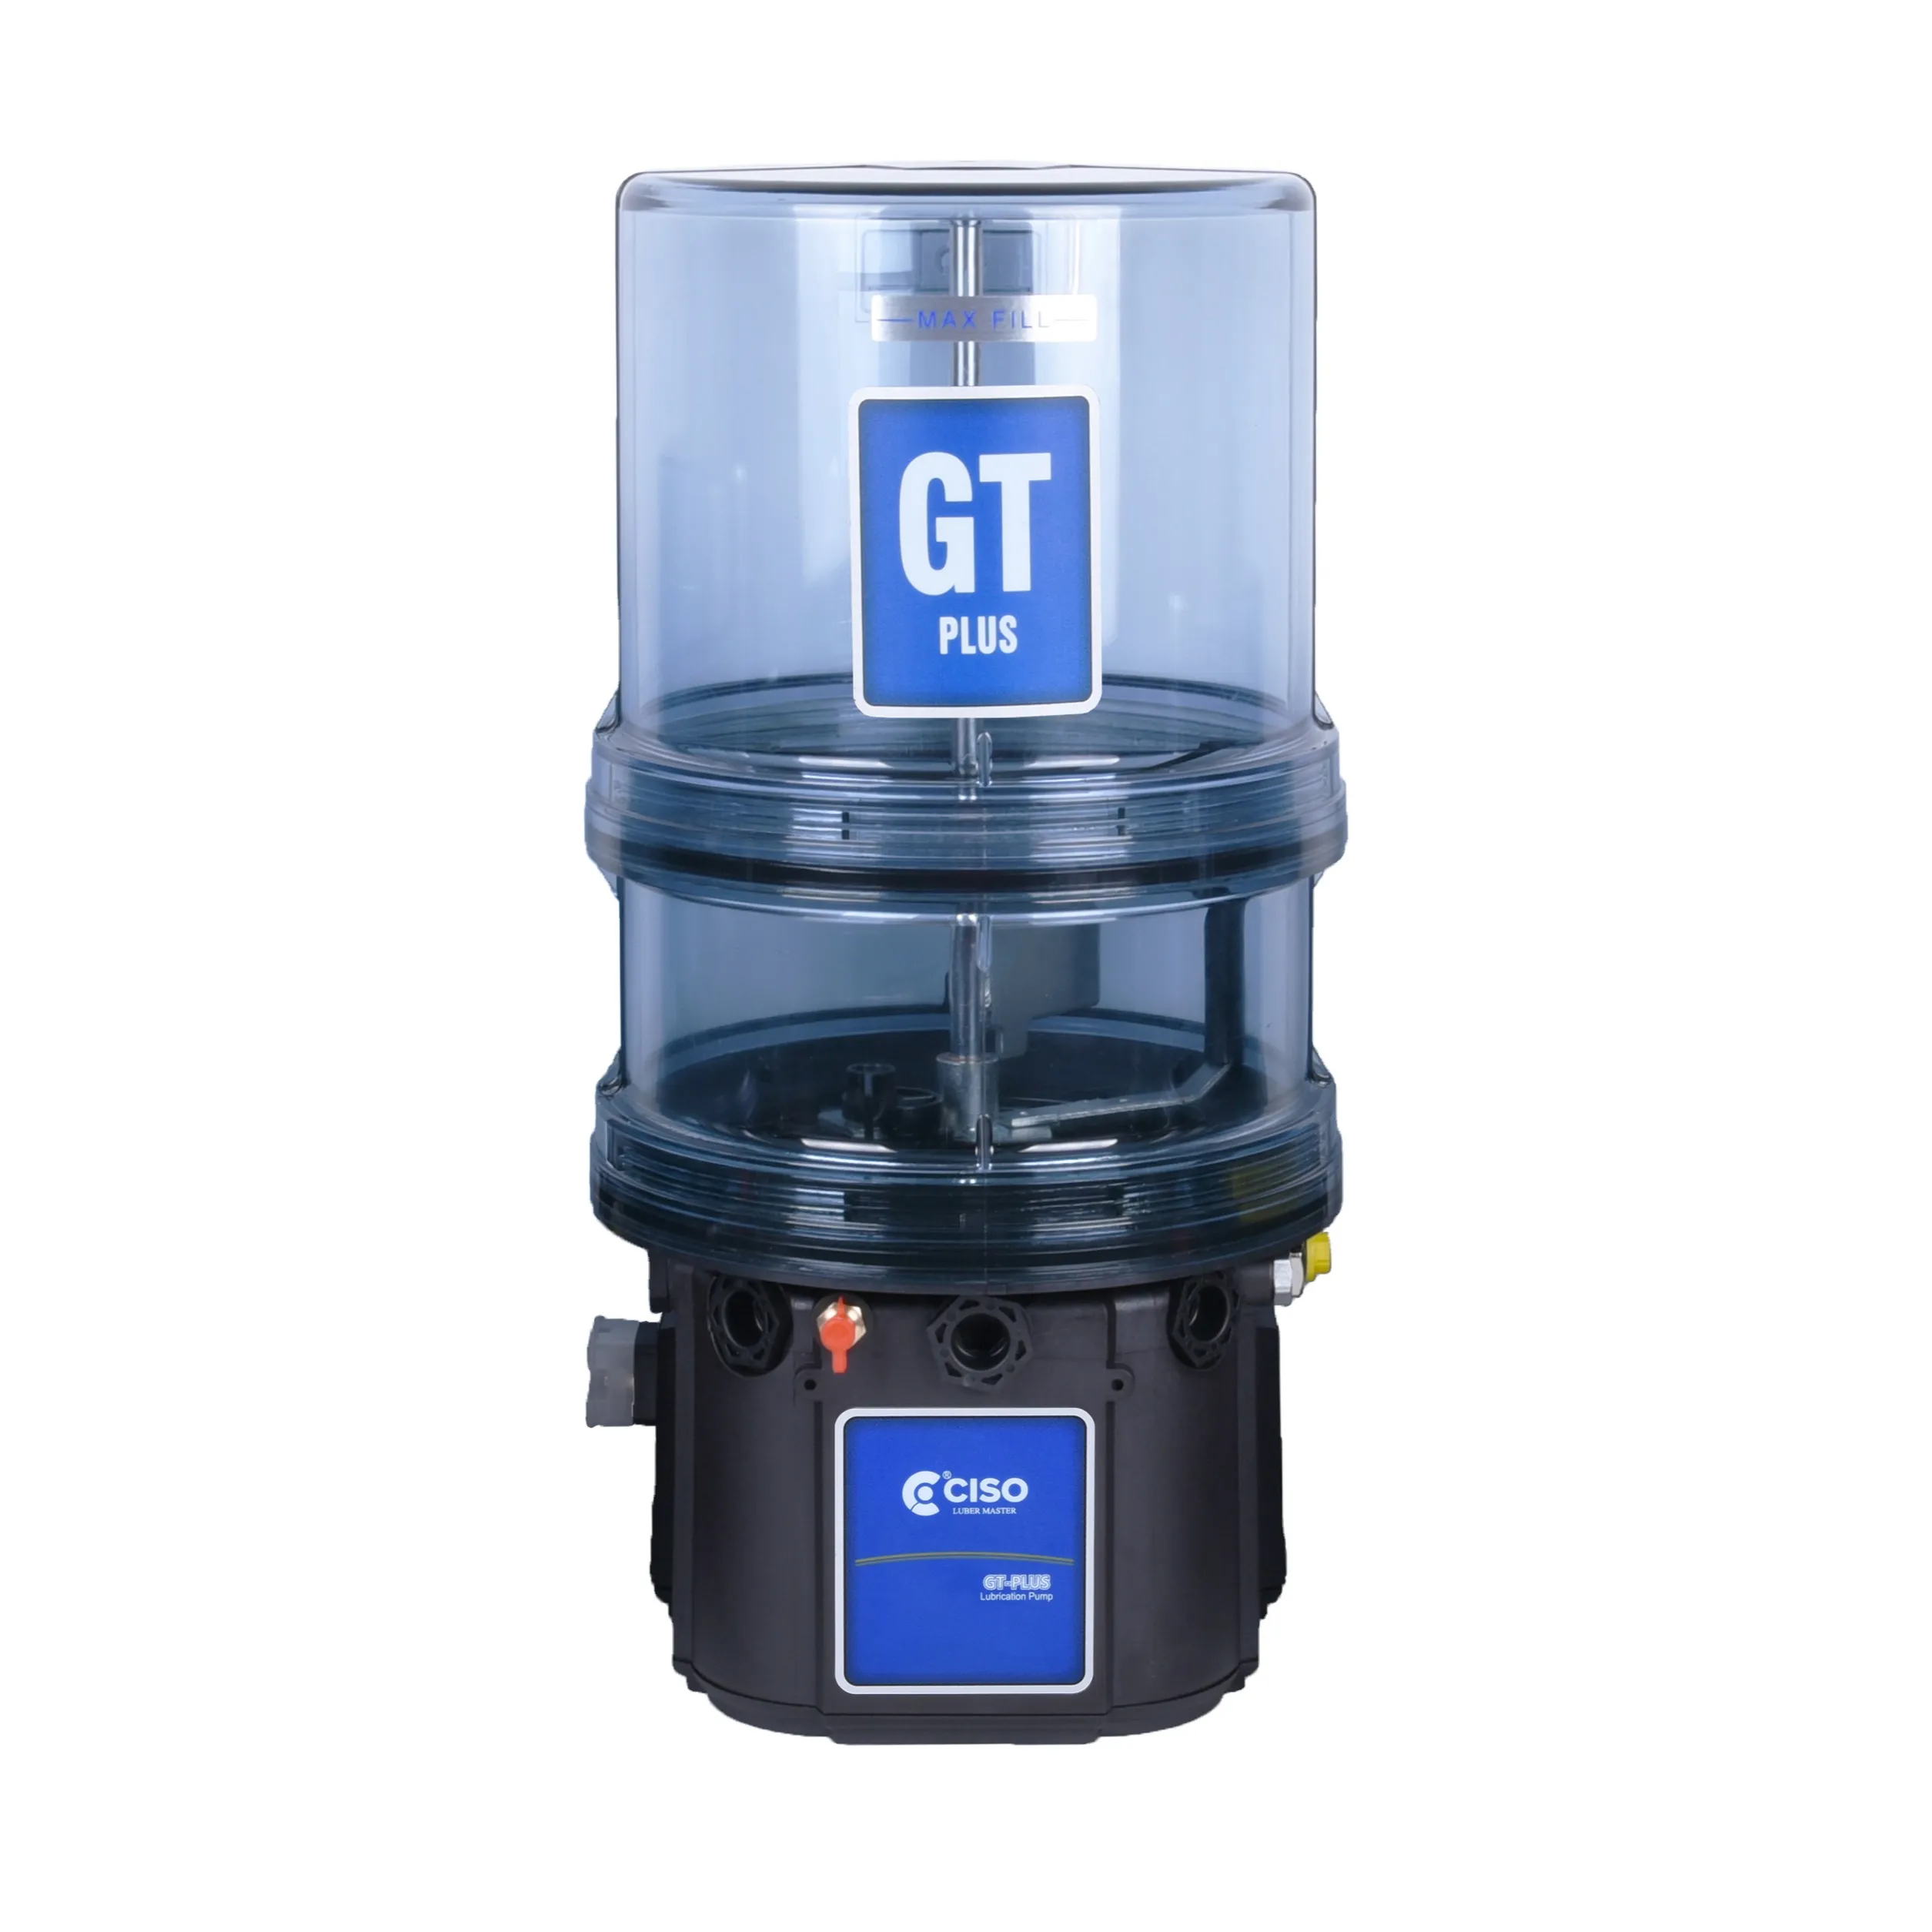 CISO GT artı 8L kontrol olmadan otomatik gres mekanik pompa DBT tipi gres pompası